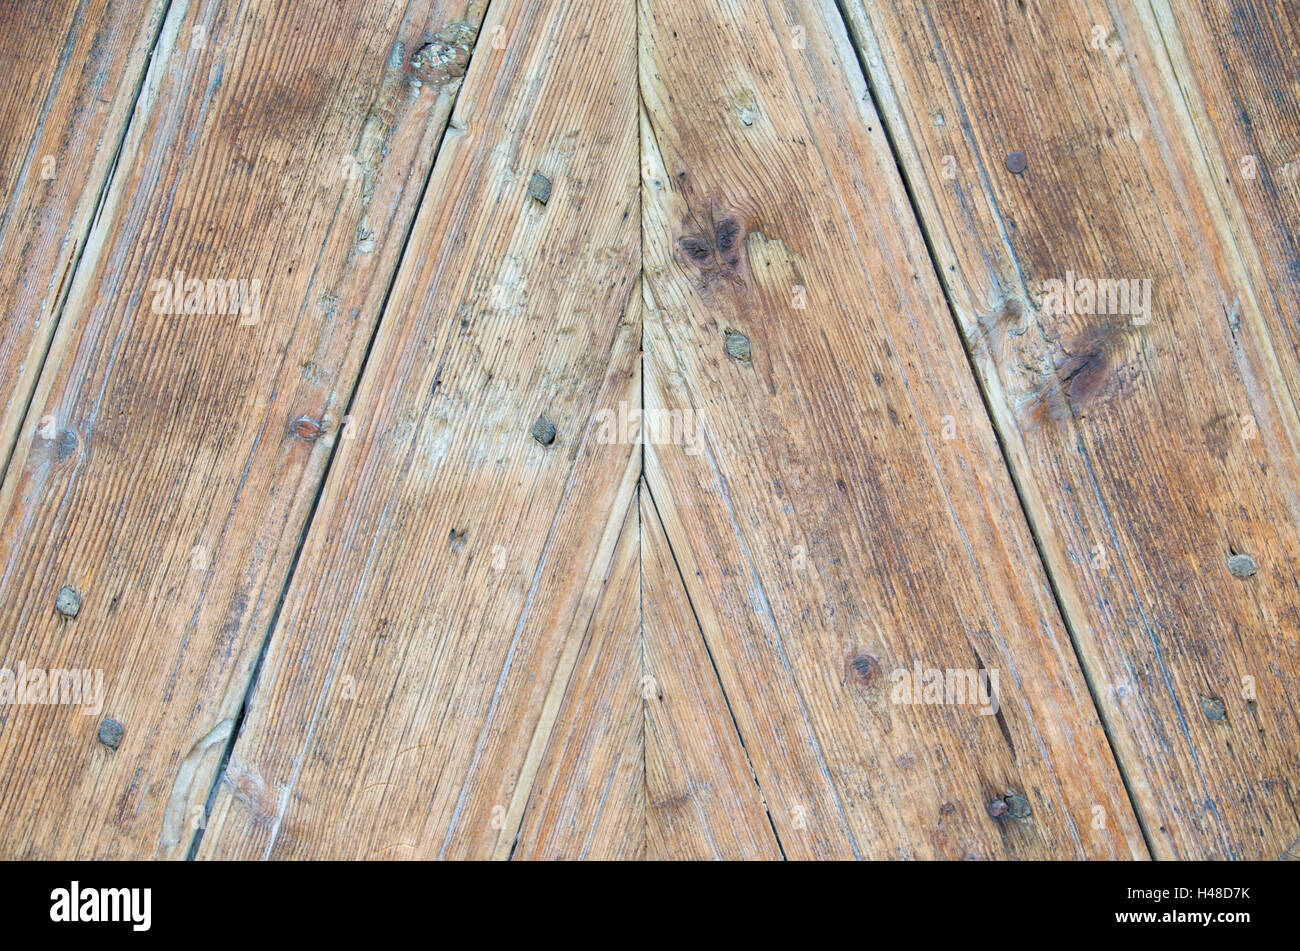 Planks of a wooden door with treenails, Stock Photo